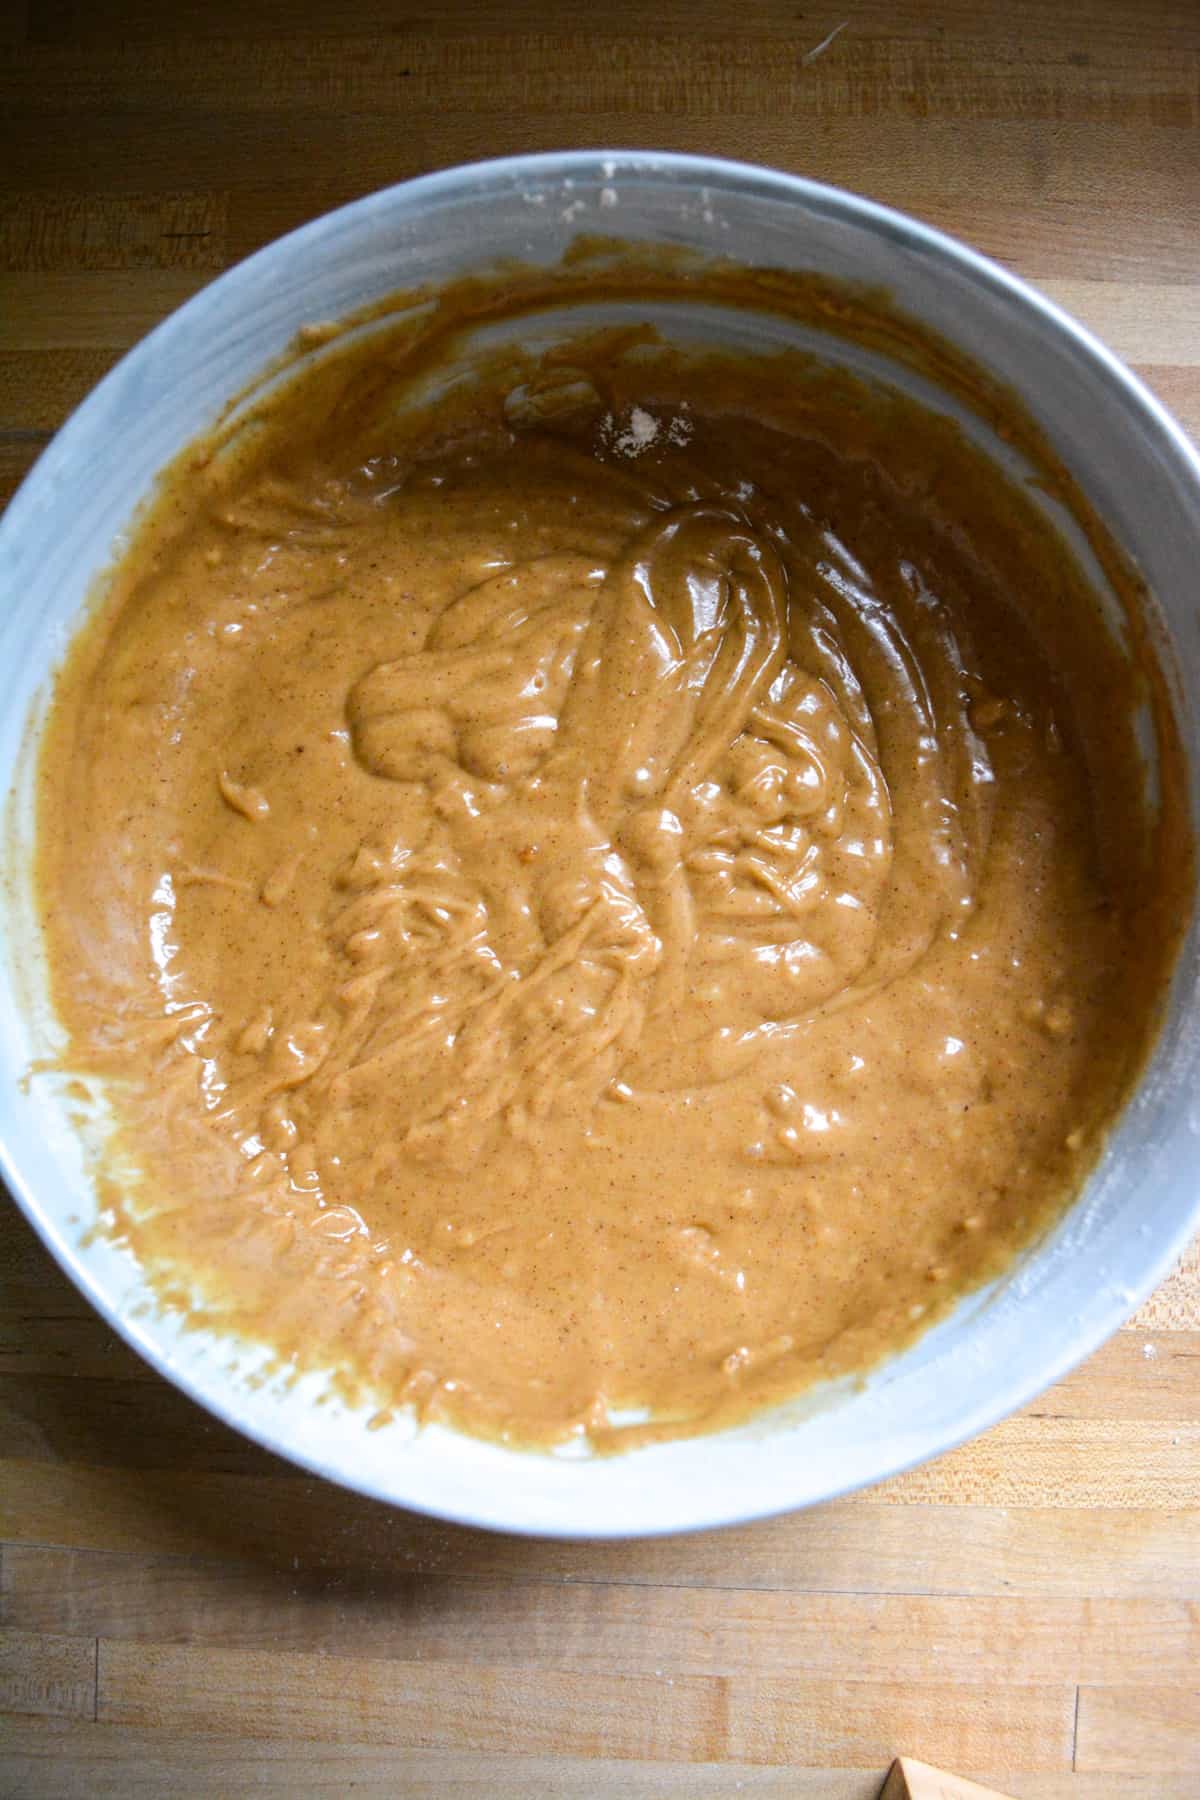 Vegan Gingerbread cake batter in a mixing bowl